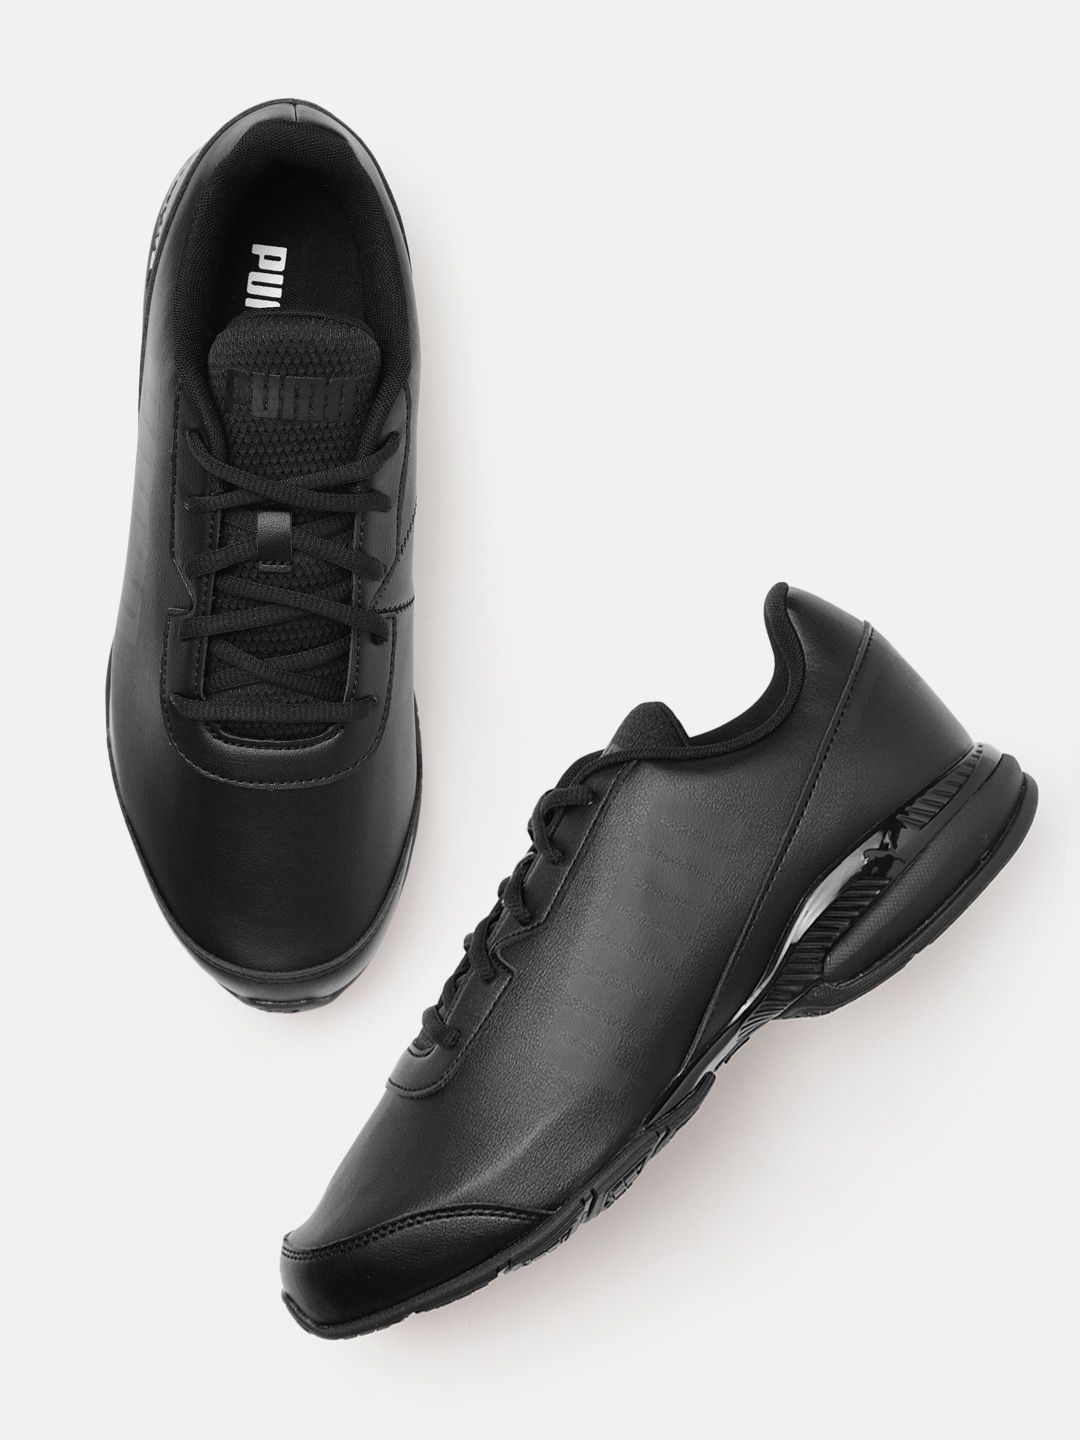 Puma Unisex Black Solid Equate SL Running Shoes Price in India